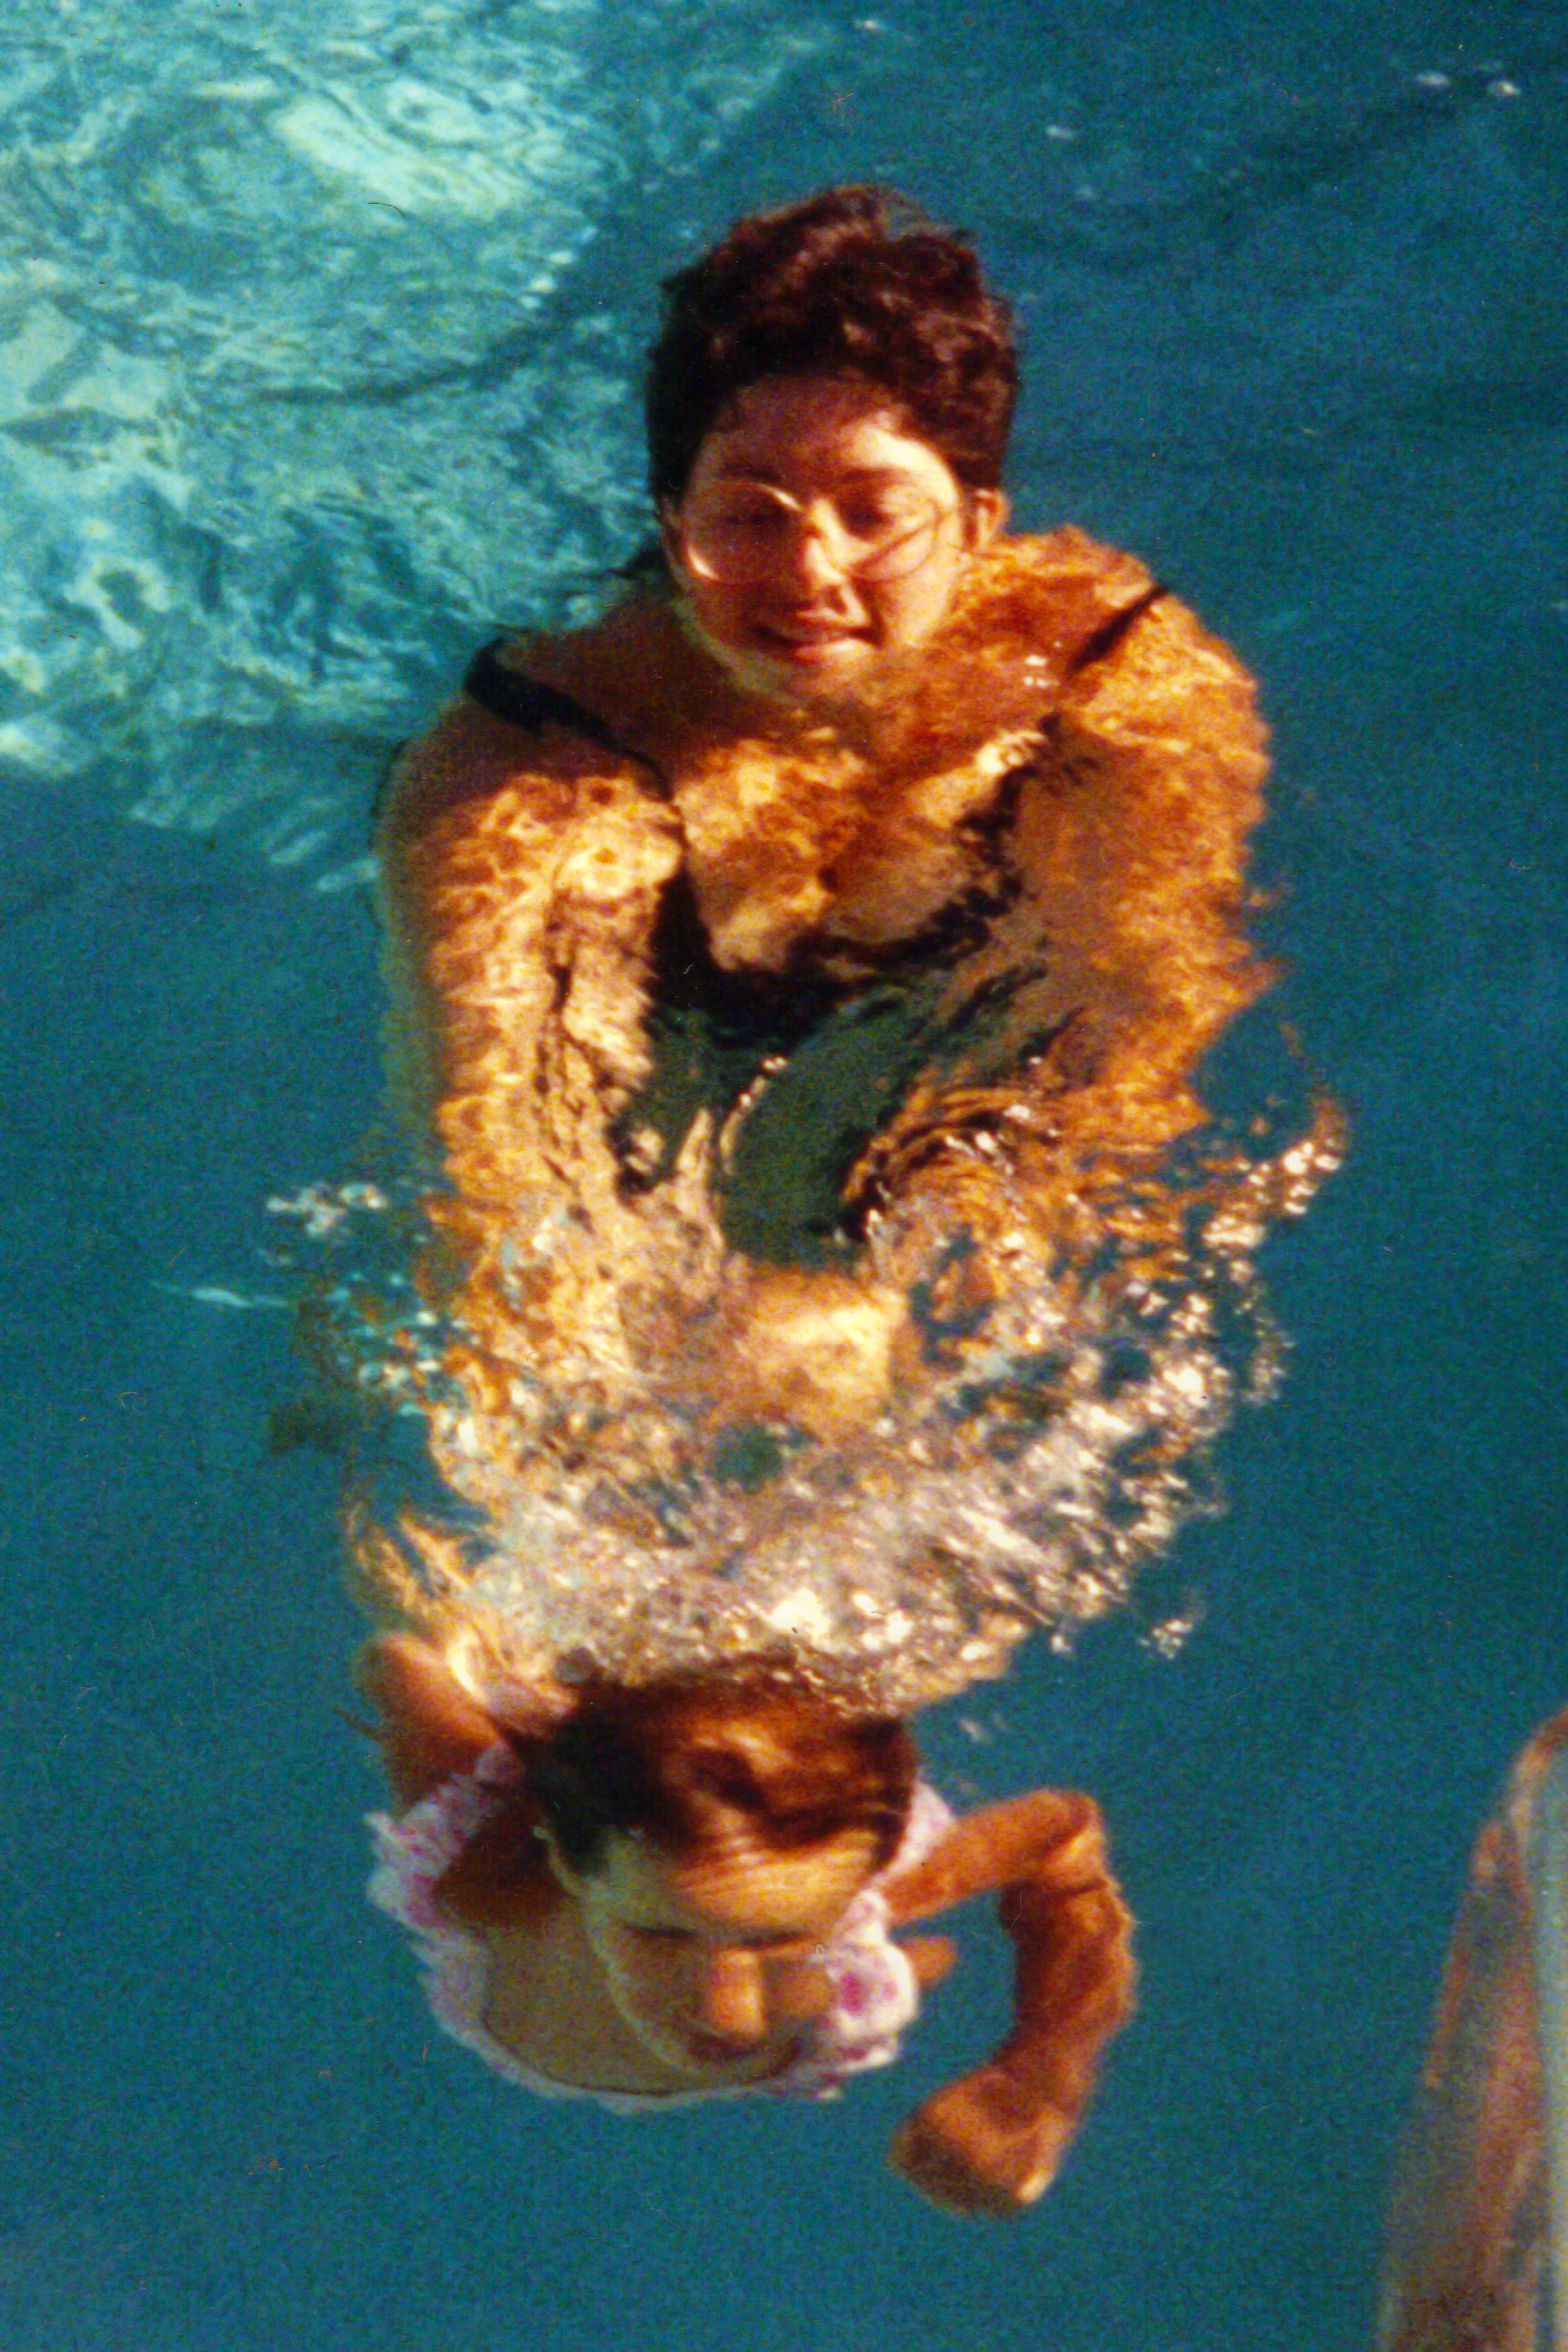 Kim swimming underwater at 2 years old